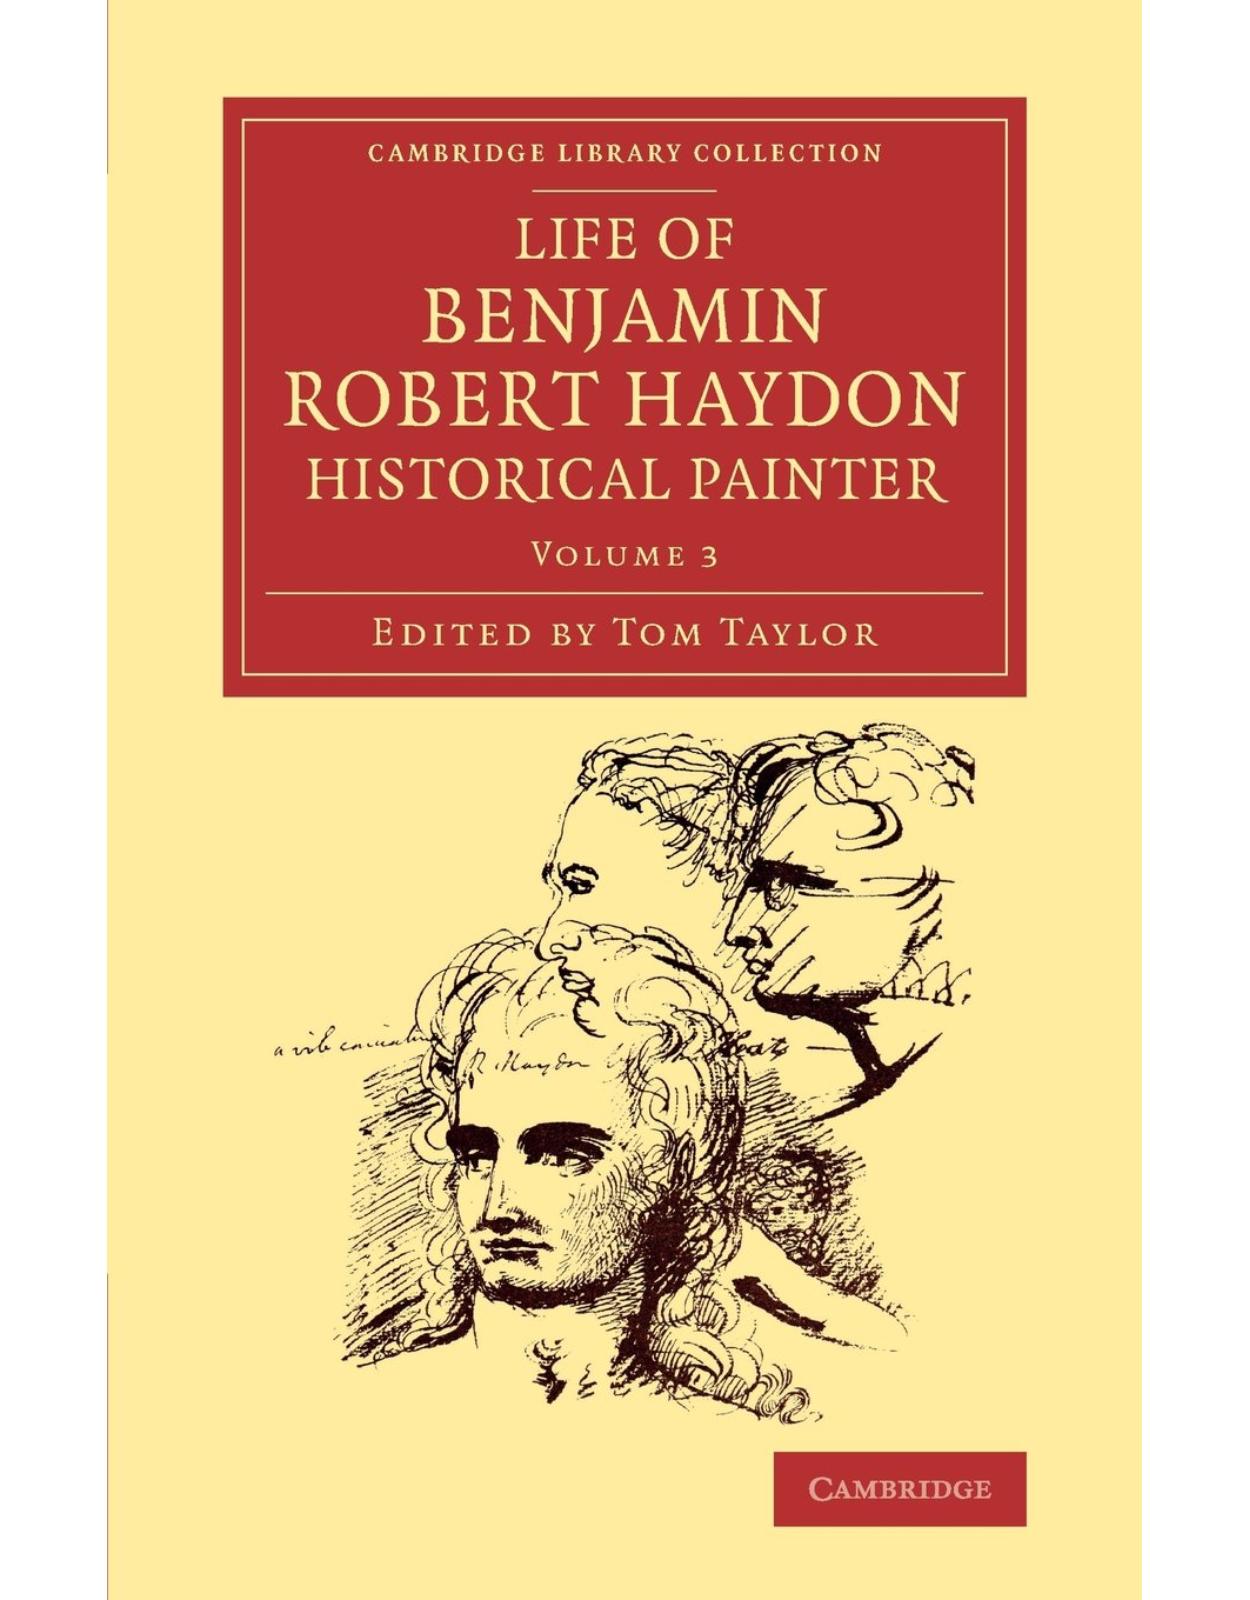 Life of Benjamin Robert Haydon, Historical Painter: From his Autobiography and Journals (Volume 3)